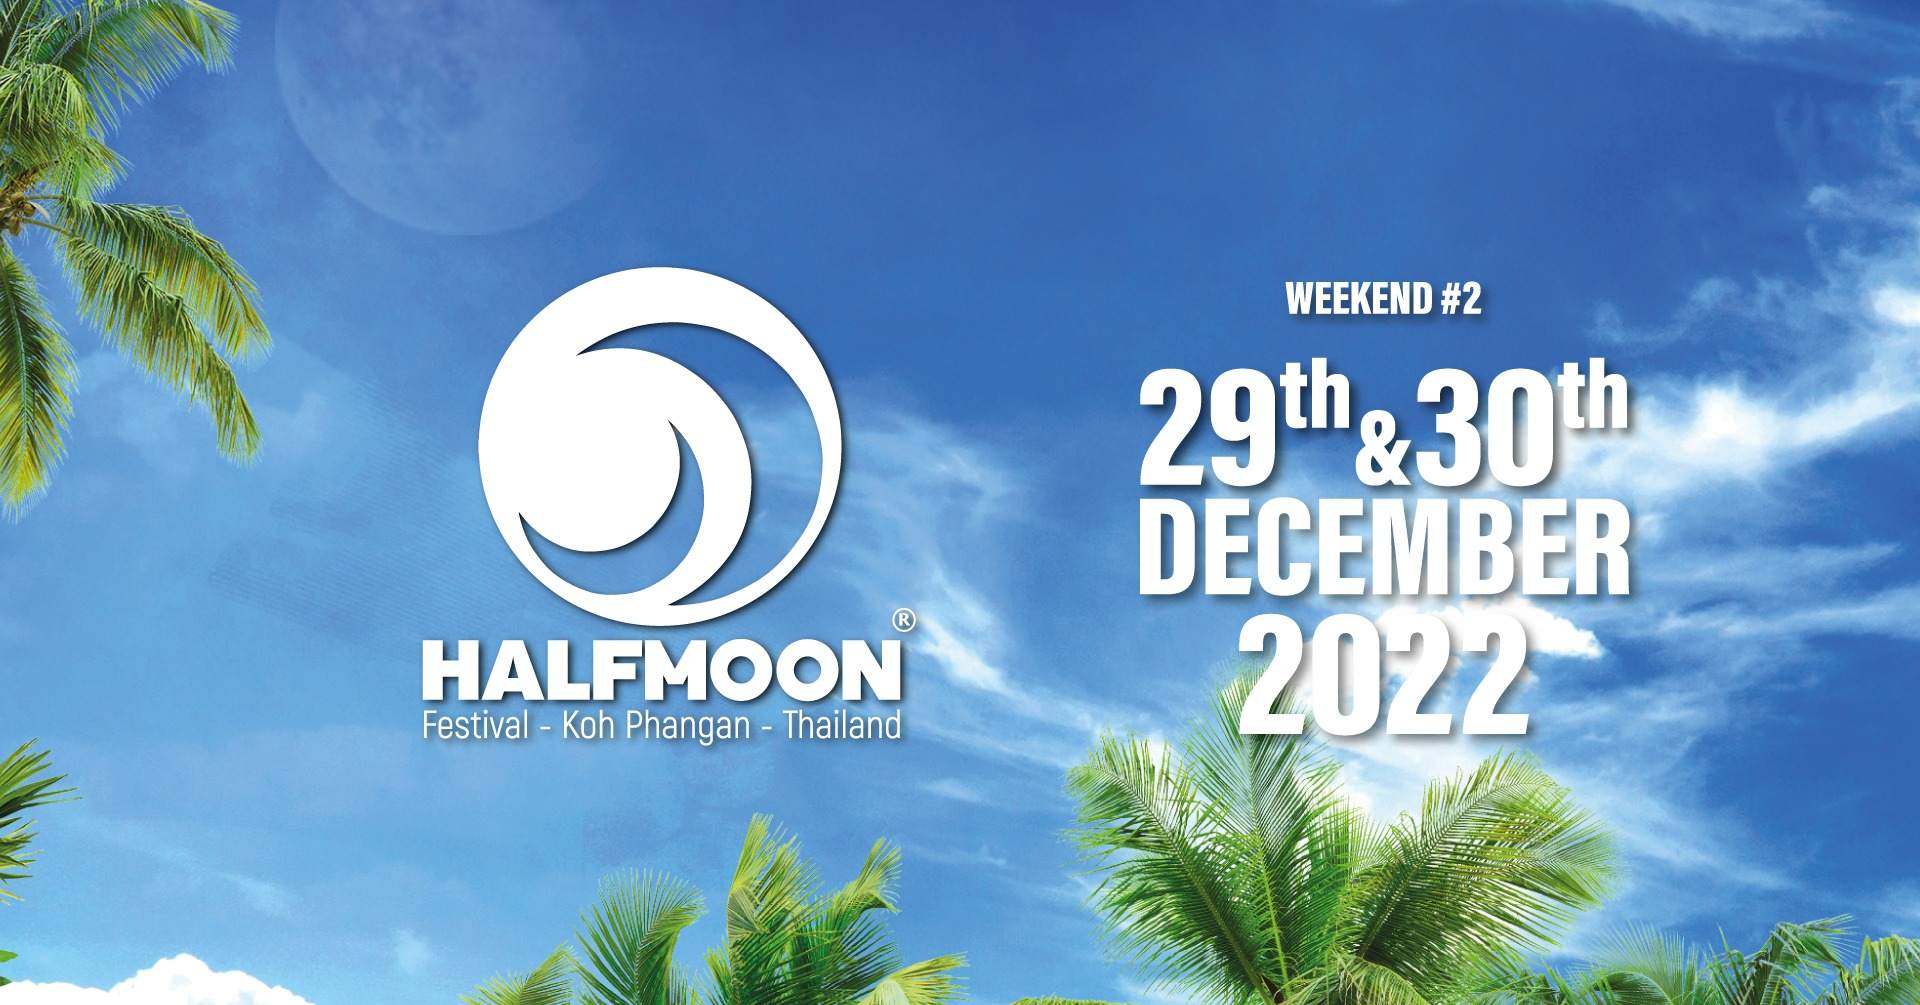 Halfmoon Festival: Weekend #2 / 29th - 30th December 2022 - フライヤー表